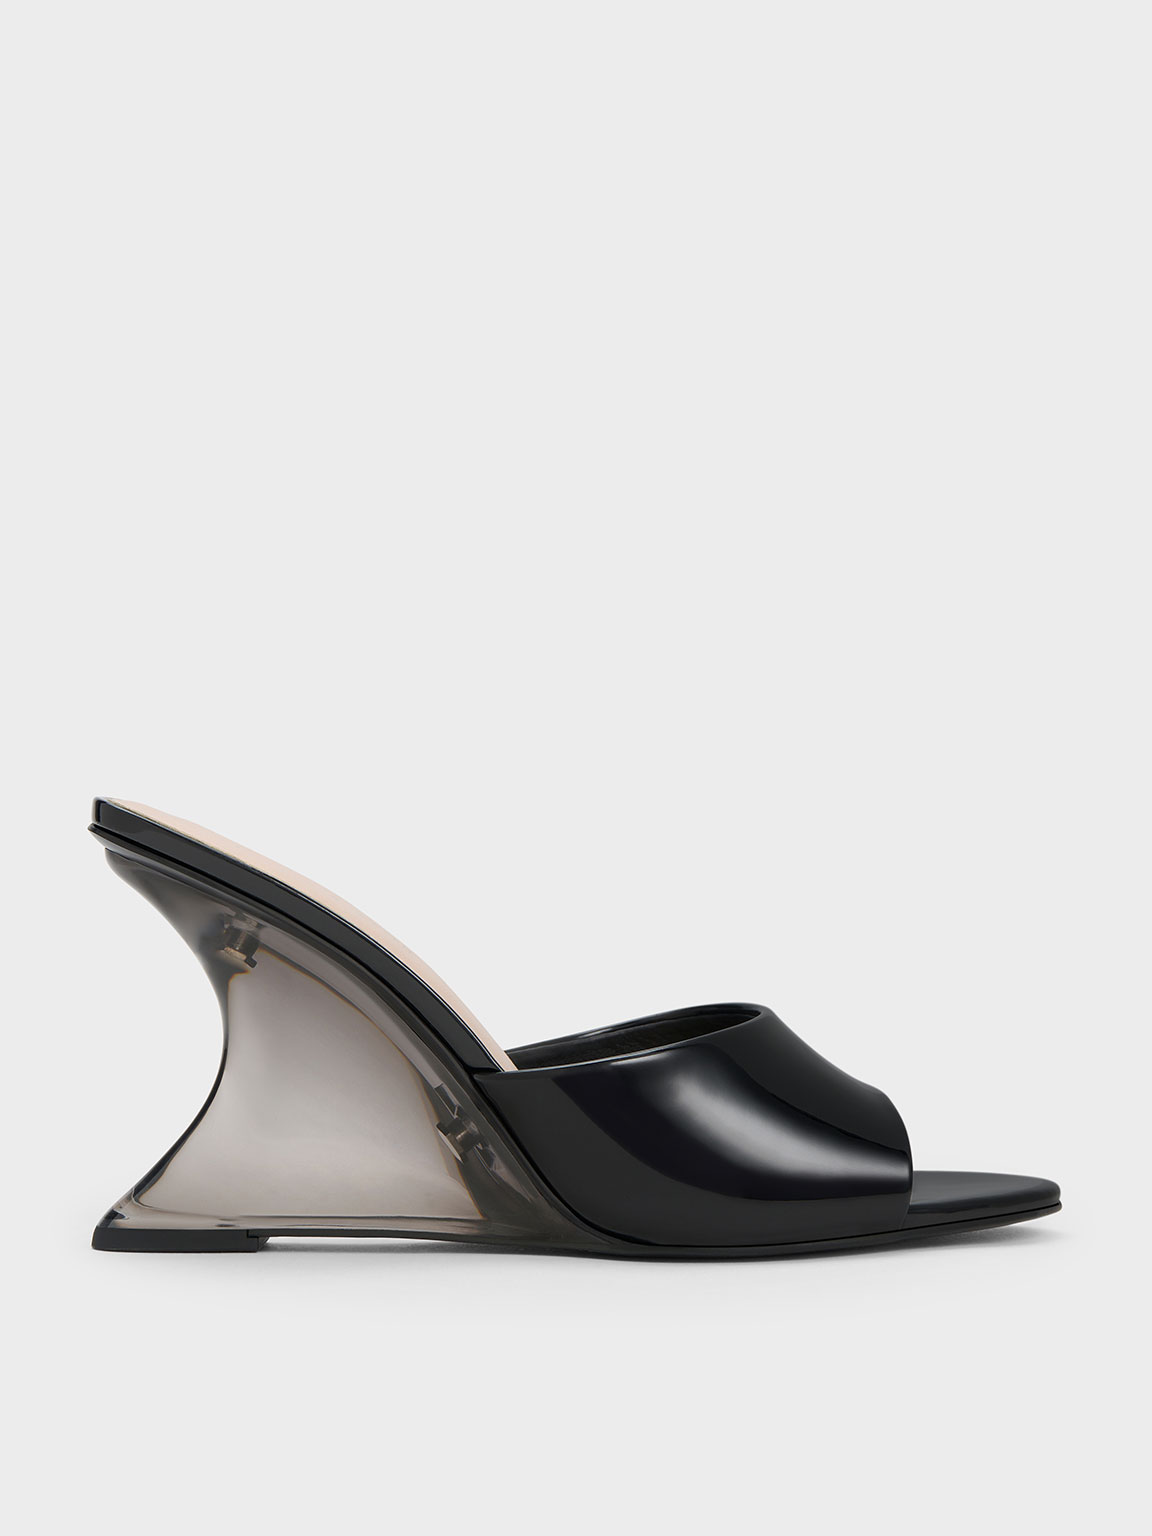 Charles & Keith Patent Sculptural Heel Wedges In Black Patent